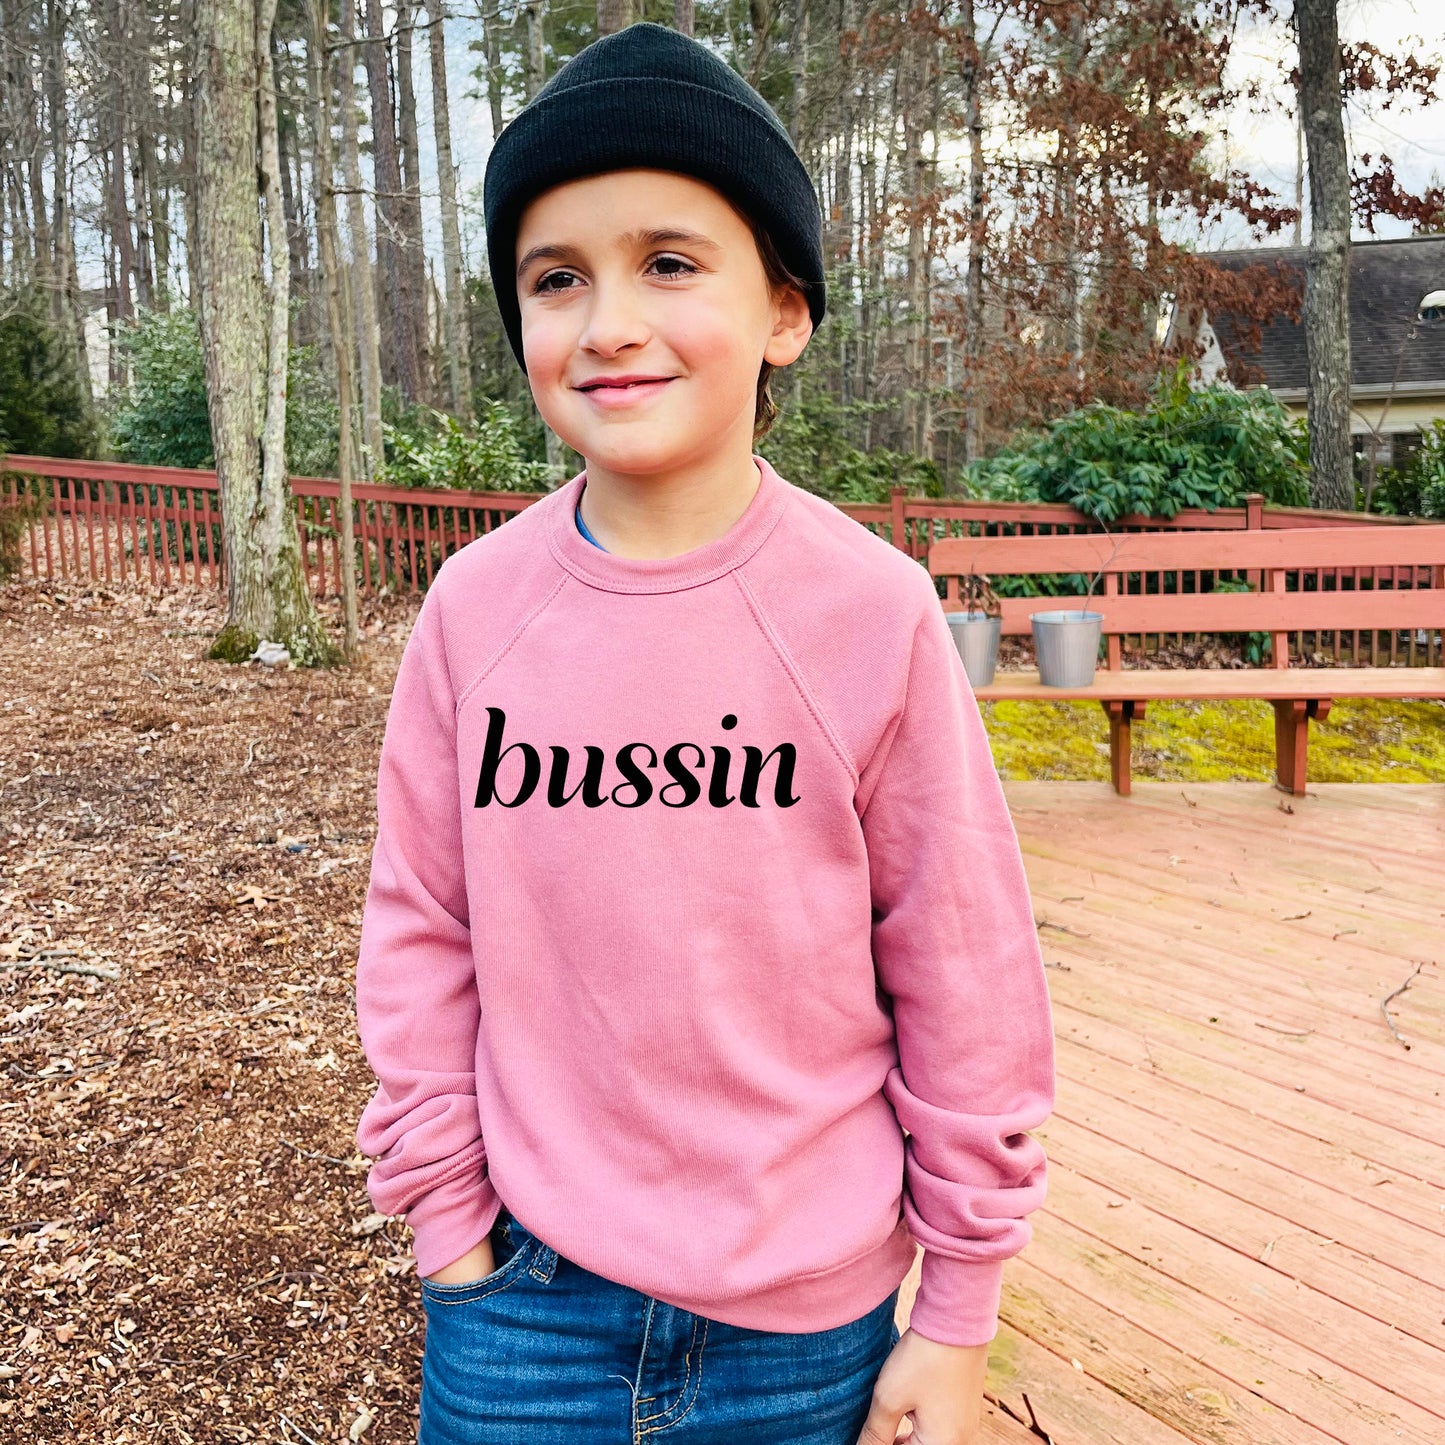 Bussin - Kid's Sweatshirt - Heather Gray or Mauve